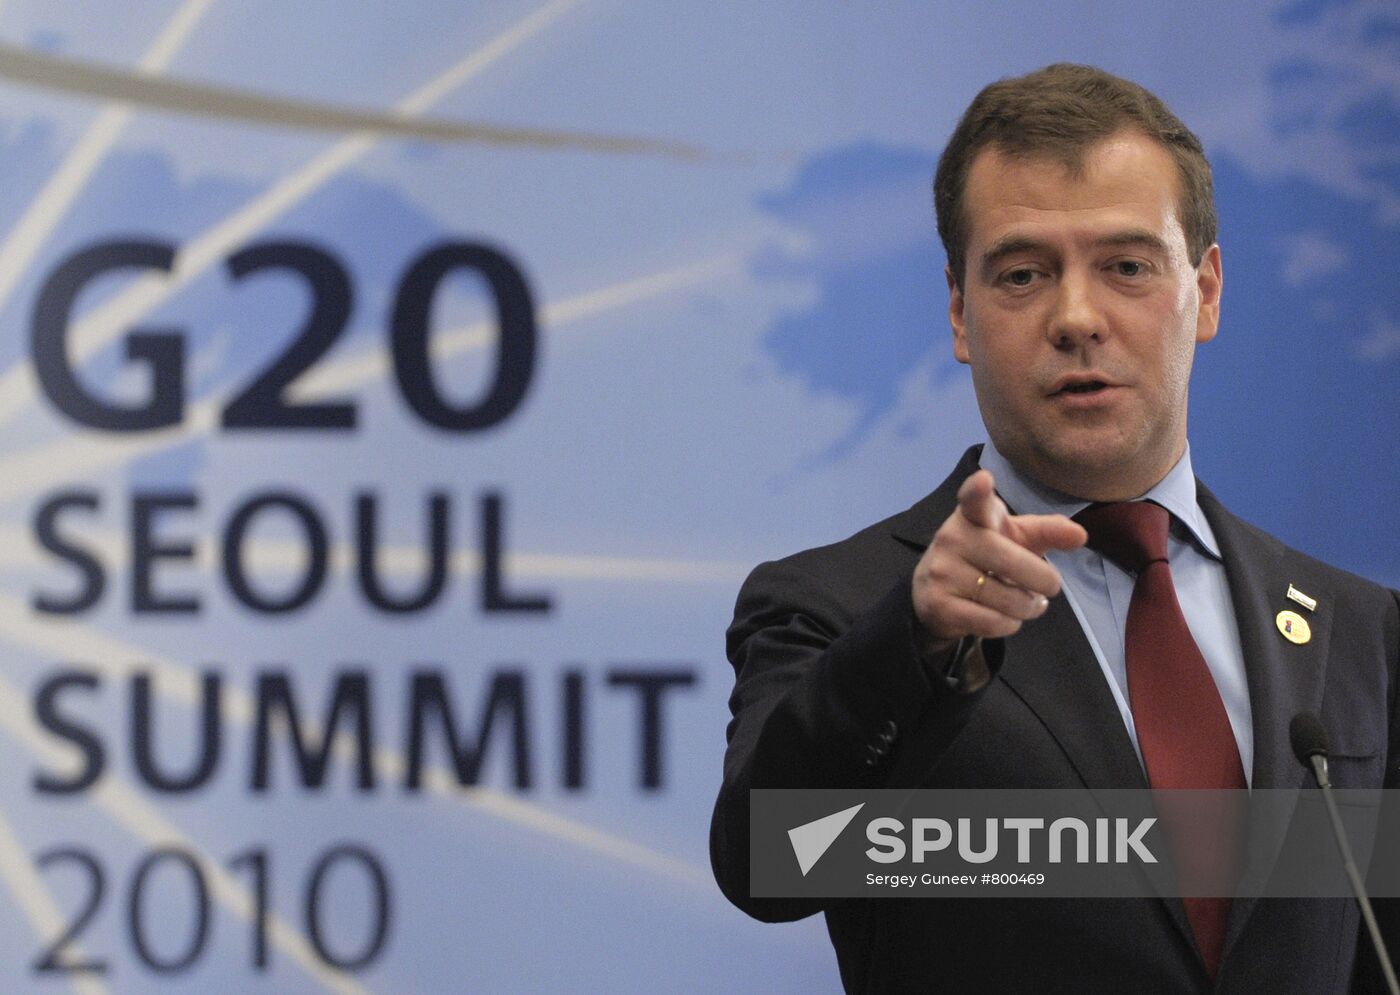 Dmitry Medvedev attends G20 summit in Seoul